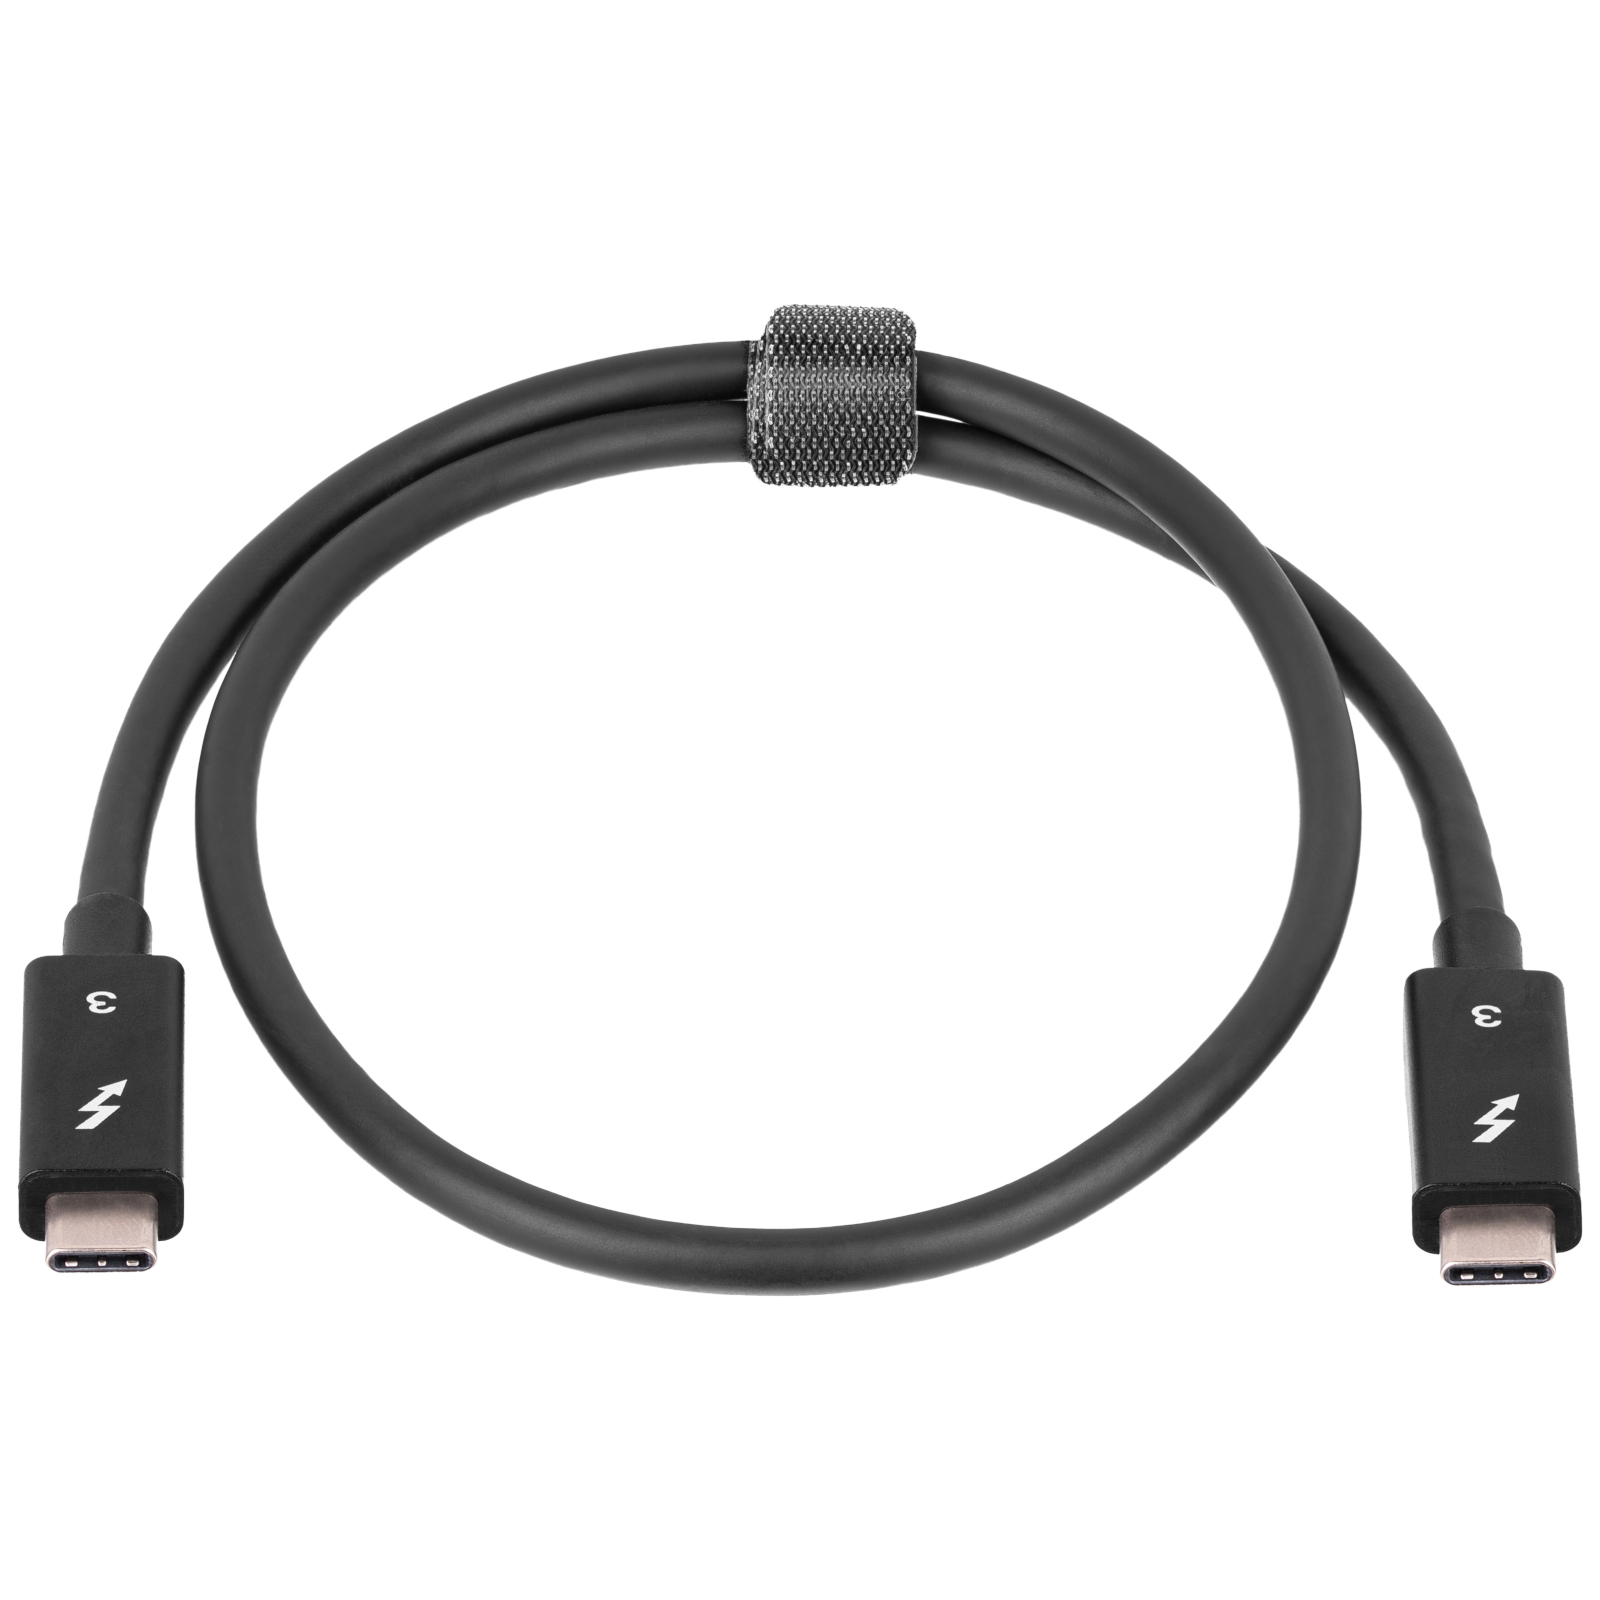 Imagen principal Cable Thunderbolt 3 (USB tipo C) 50cm AK-USB-33 pasivo